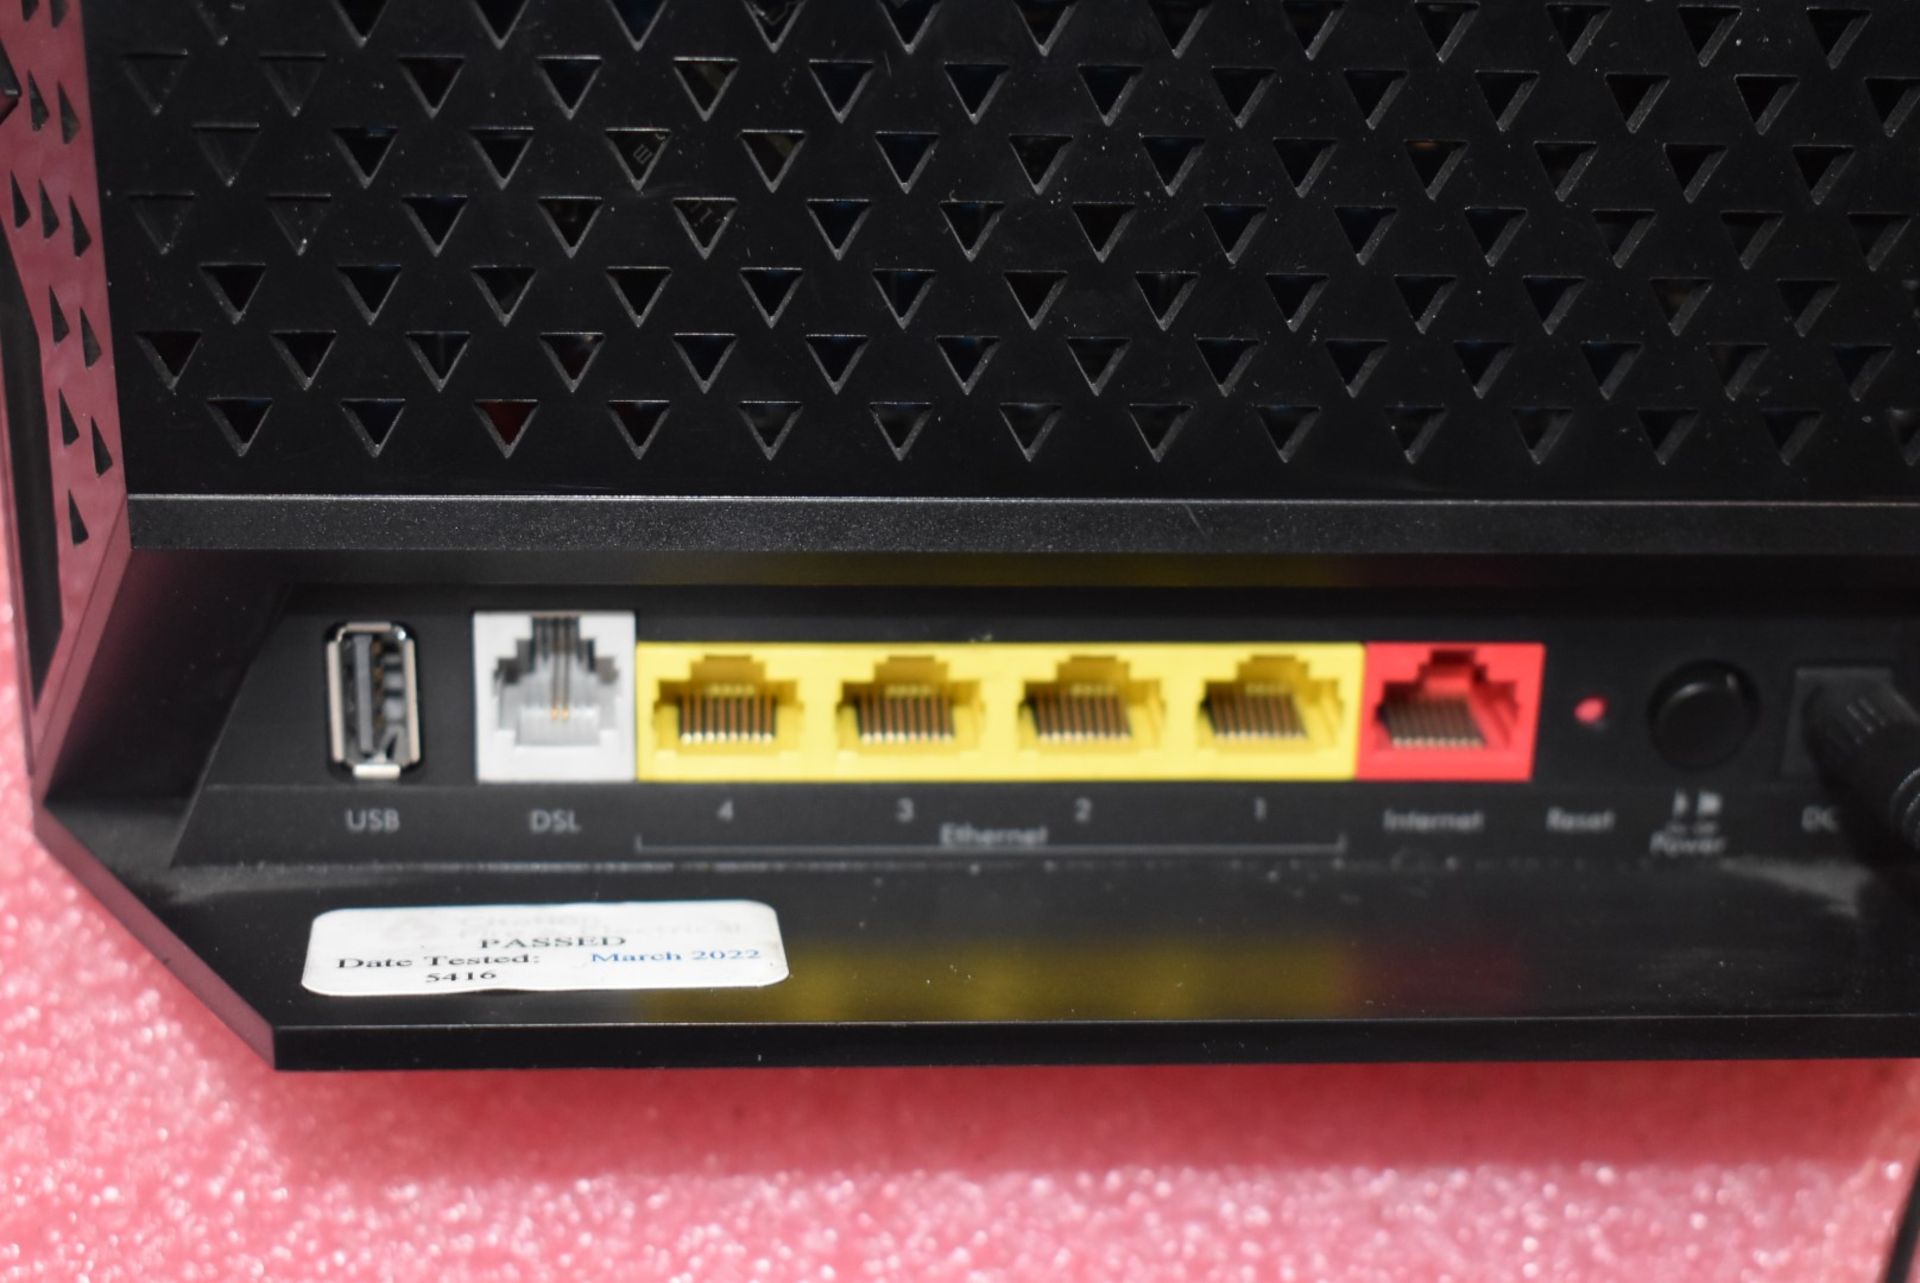 1 x Netgear D6400 AC1600 WiFi VDSL/ADSL Modem Router - Includes Power Adaptor - Image 3 of 4